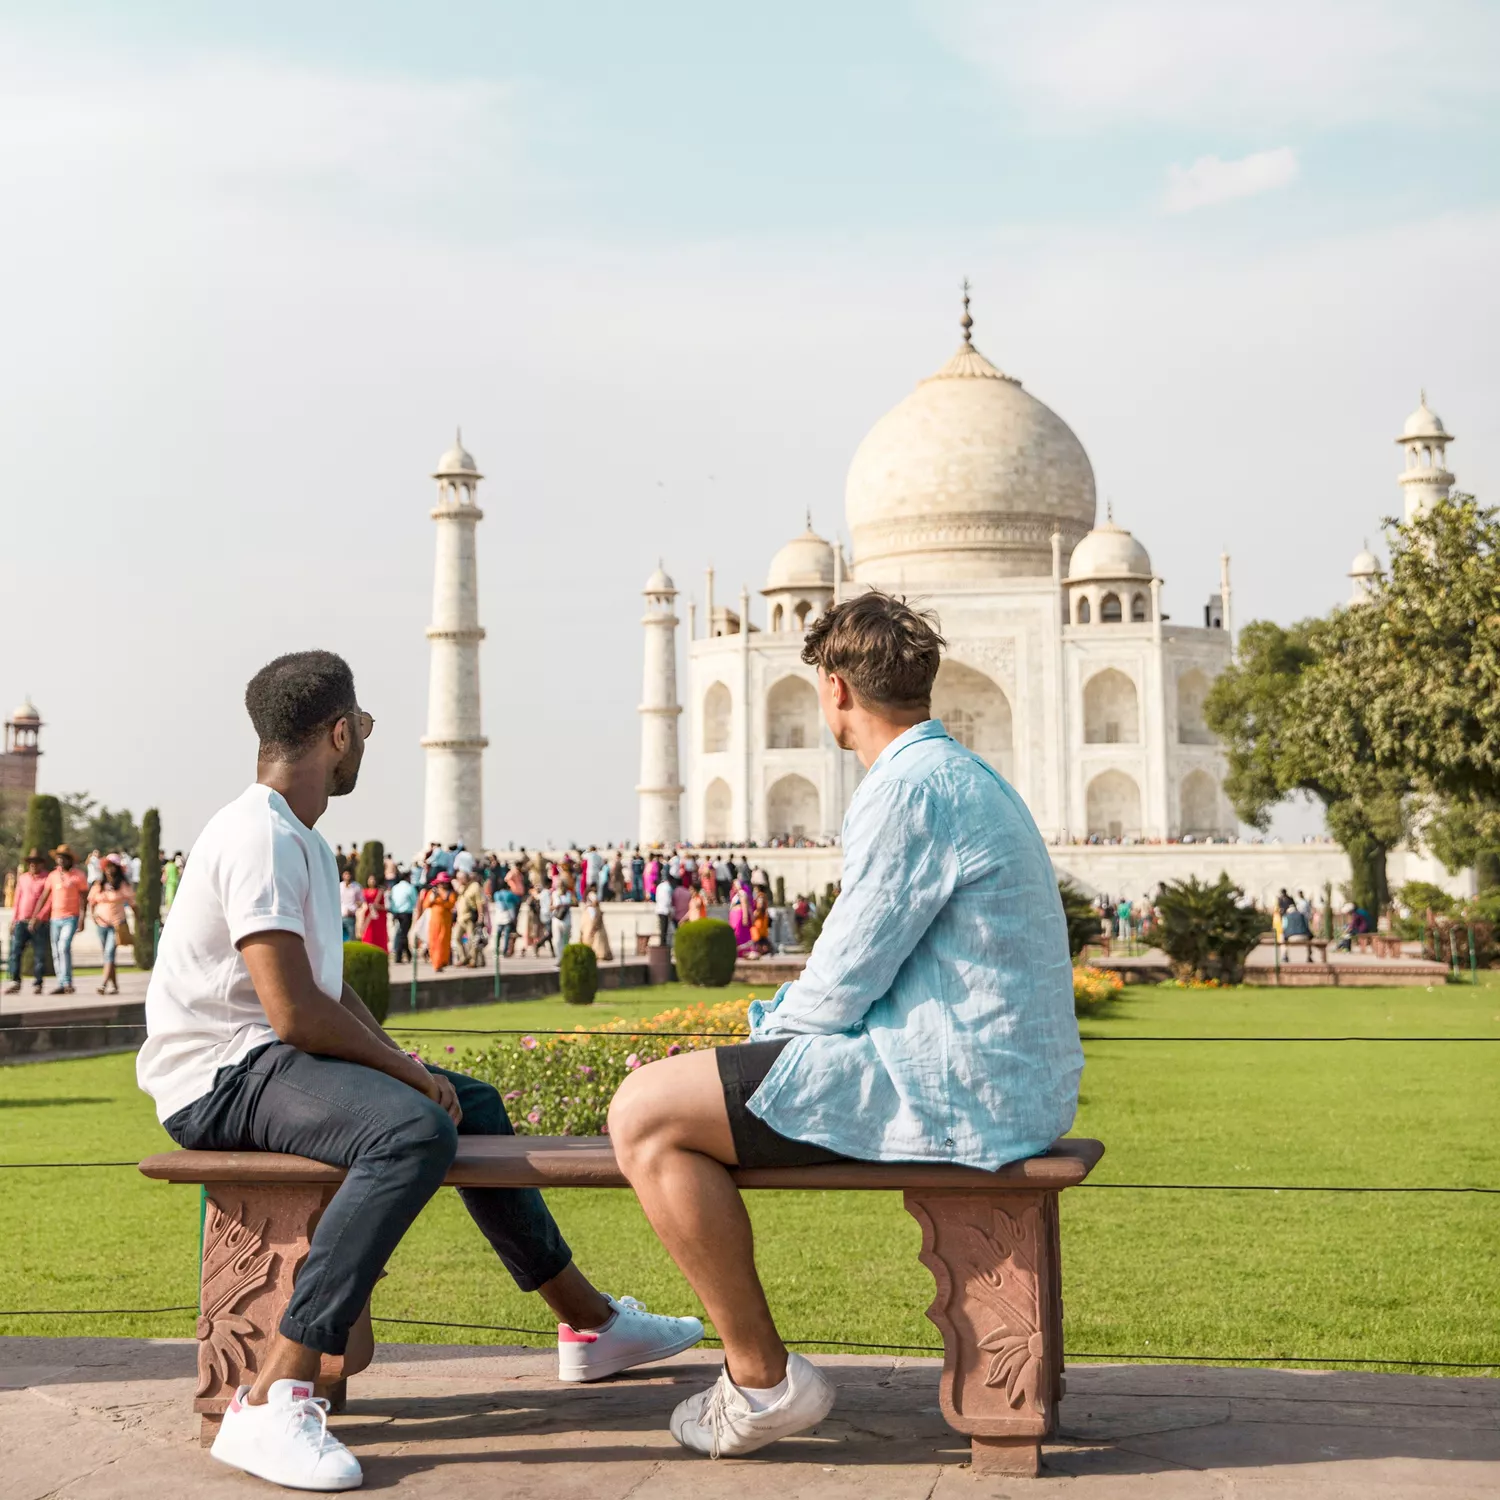 How To Book Taj Mahal Tickets Online Inside Handful Of Clicks